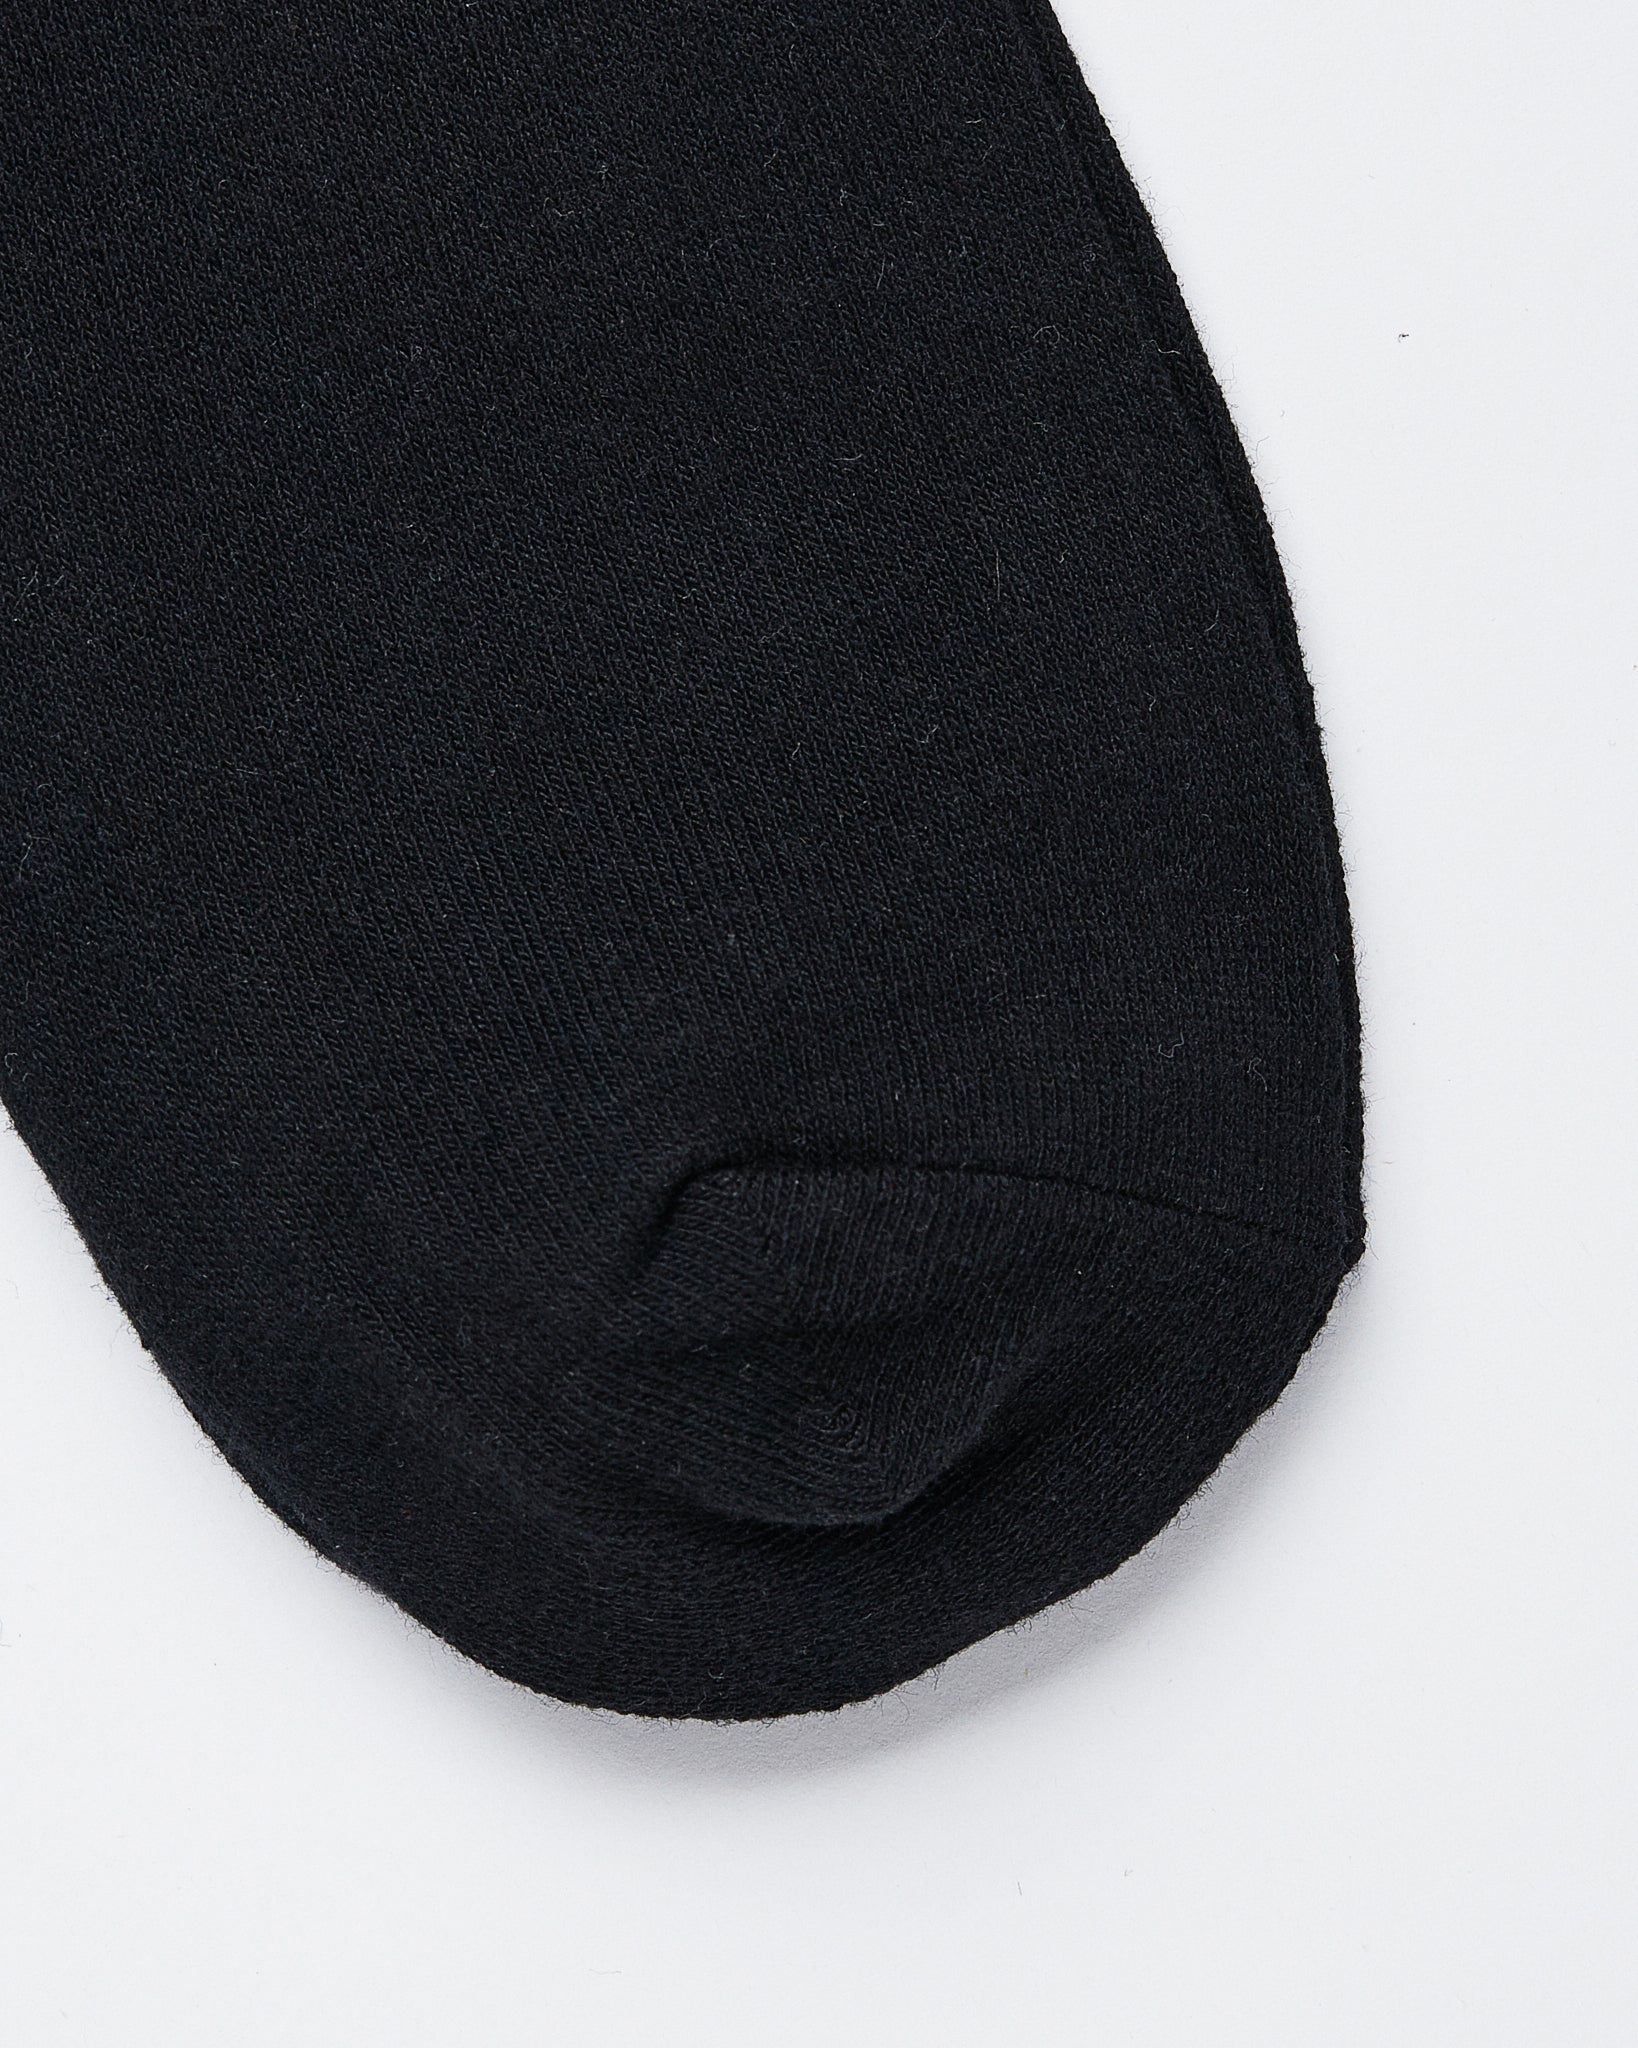 CVS Star Embroidered Black Low Cut 1 Pairs Socks 2.10